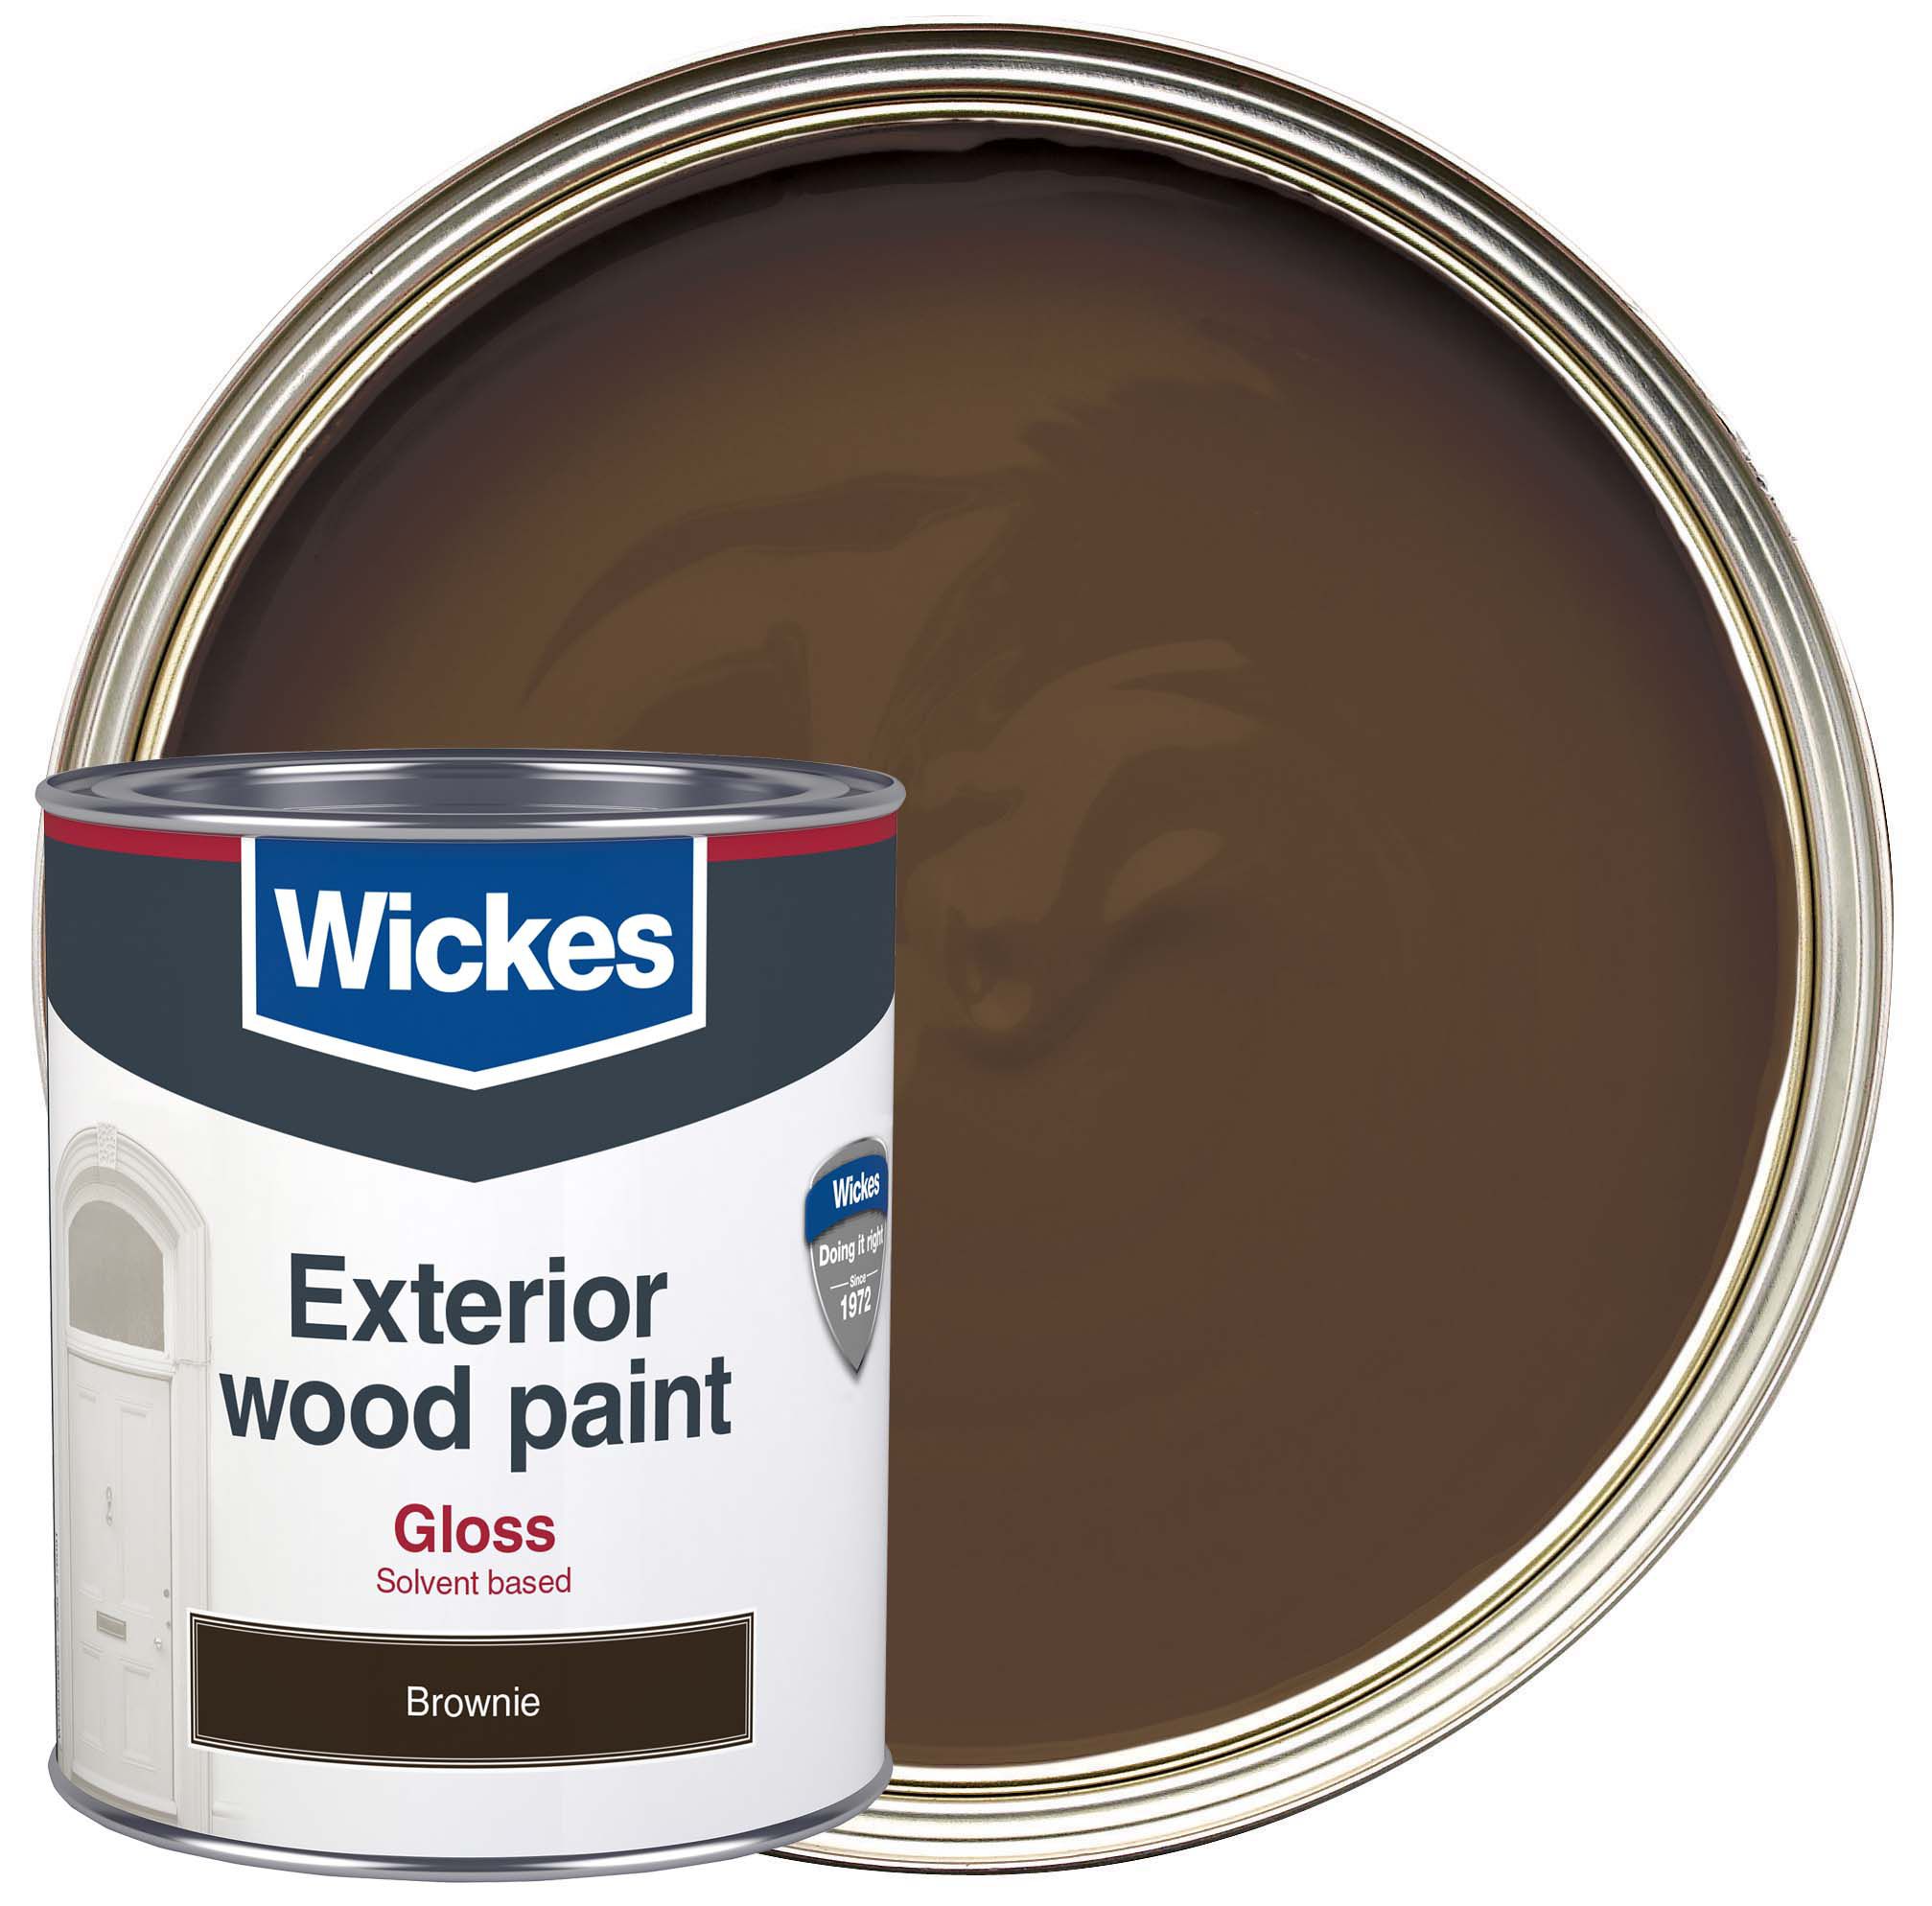 Wickes Exterior Gloss Paint - Brownie - 750ml